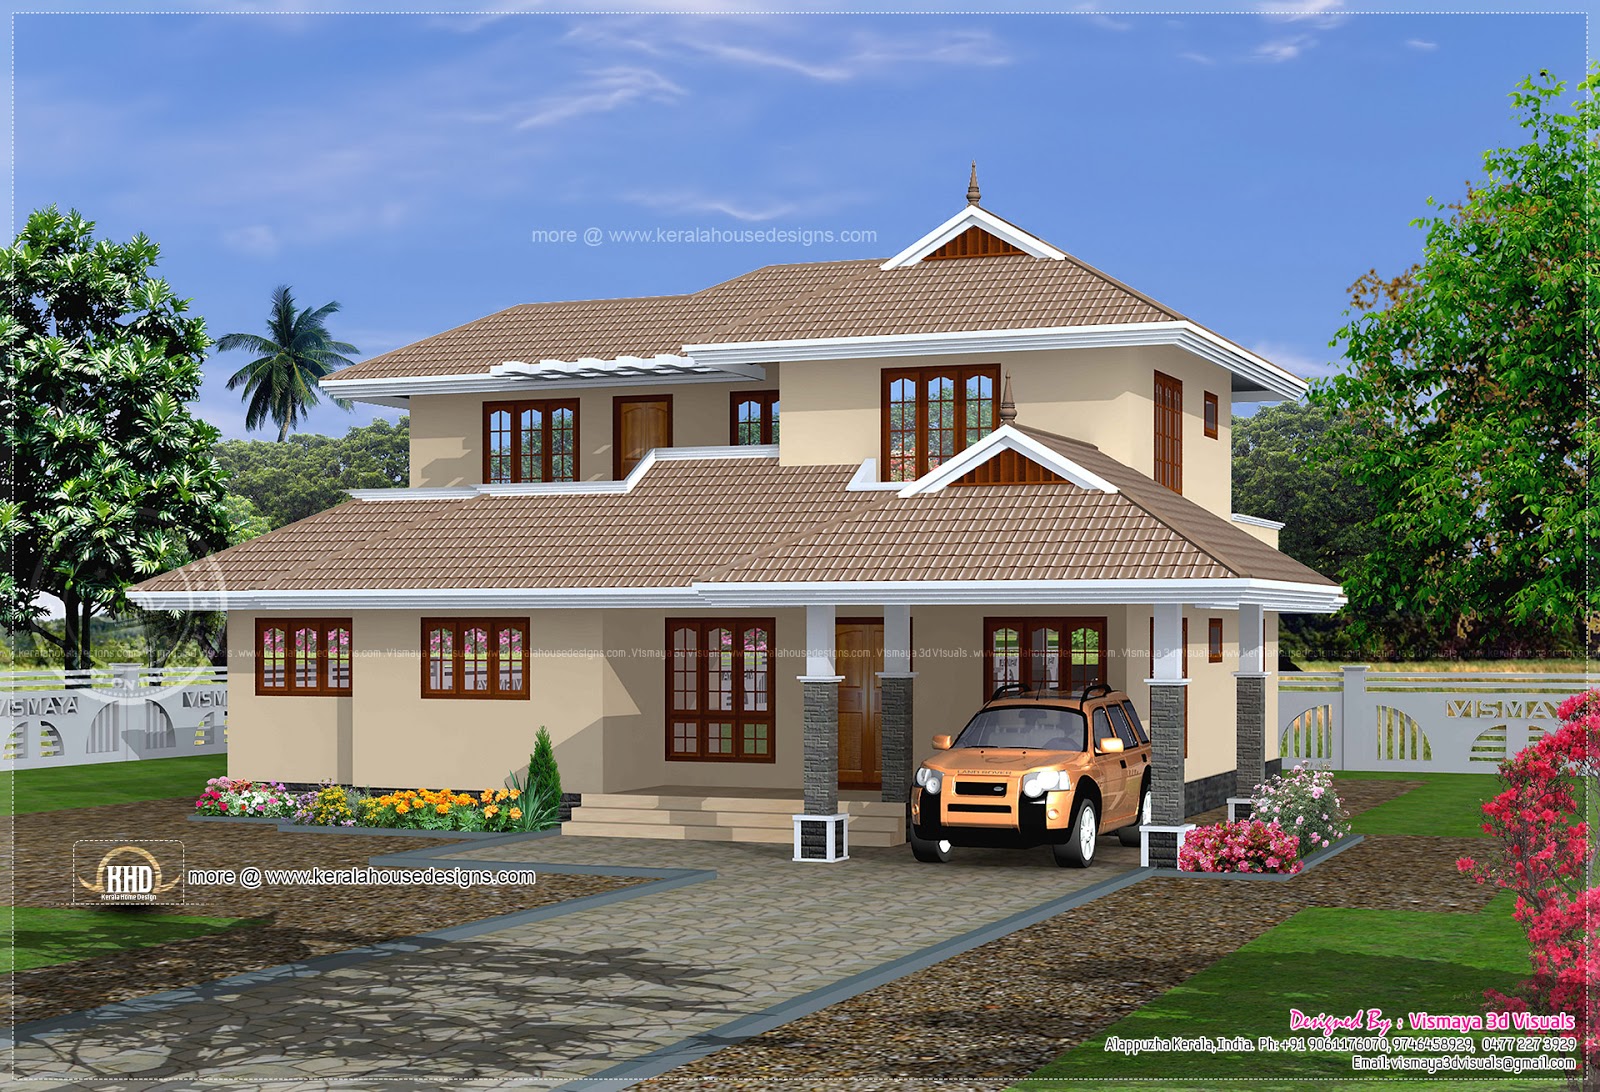 1819 sq ft simple  Kerala  home  plan  Home  Kerala  Plans 